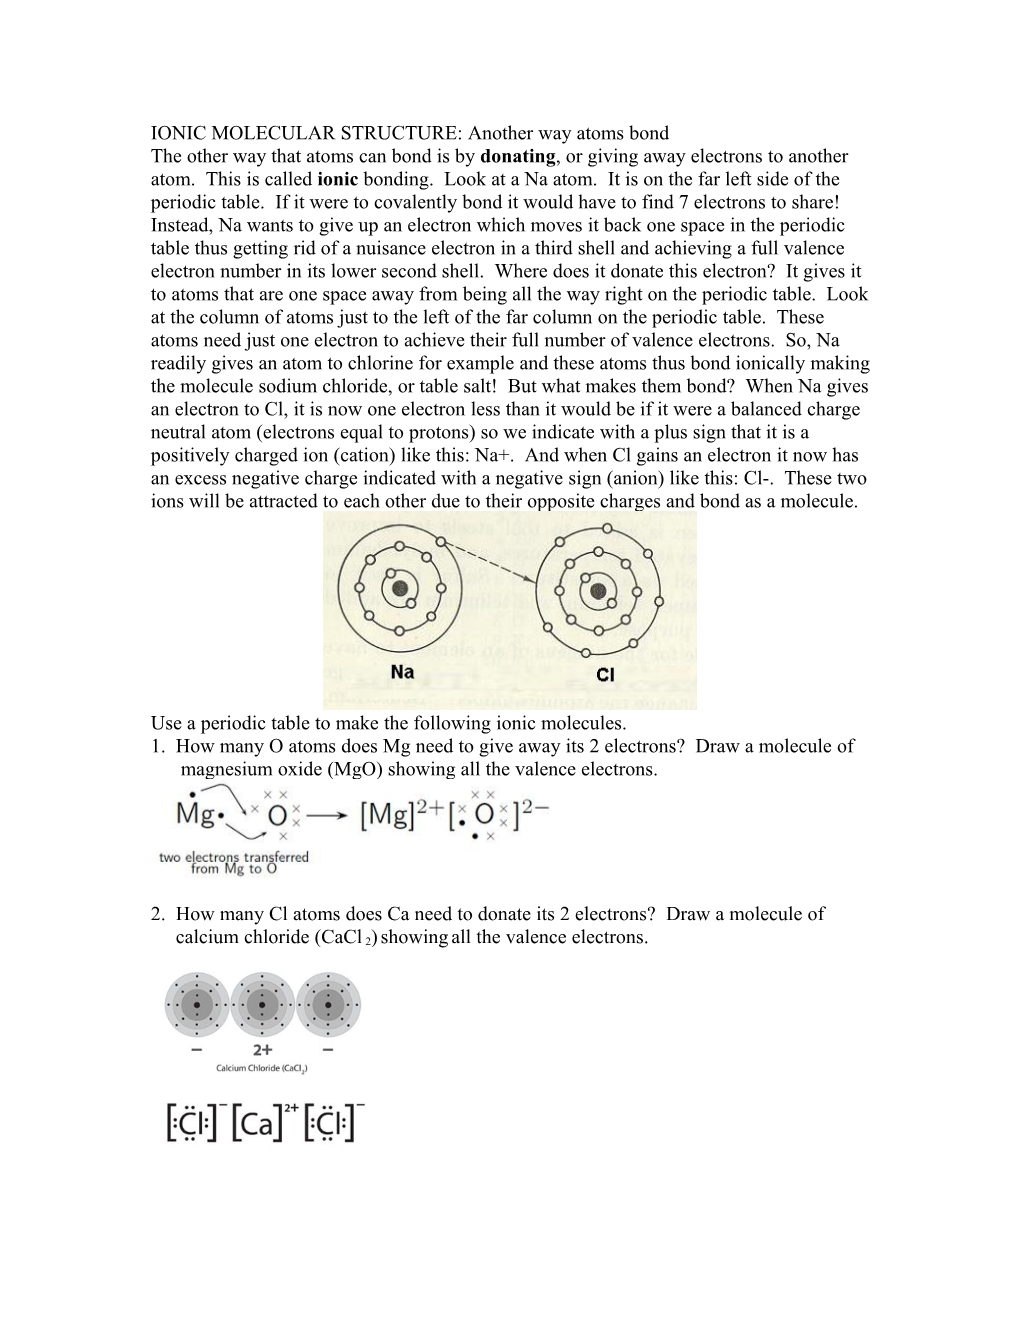 IONIC MOLECULAR BONDING: Another Way Atoms Bond